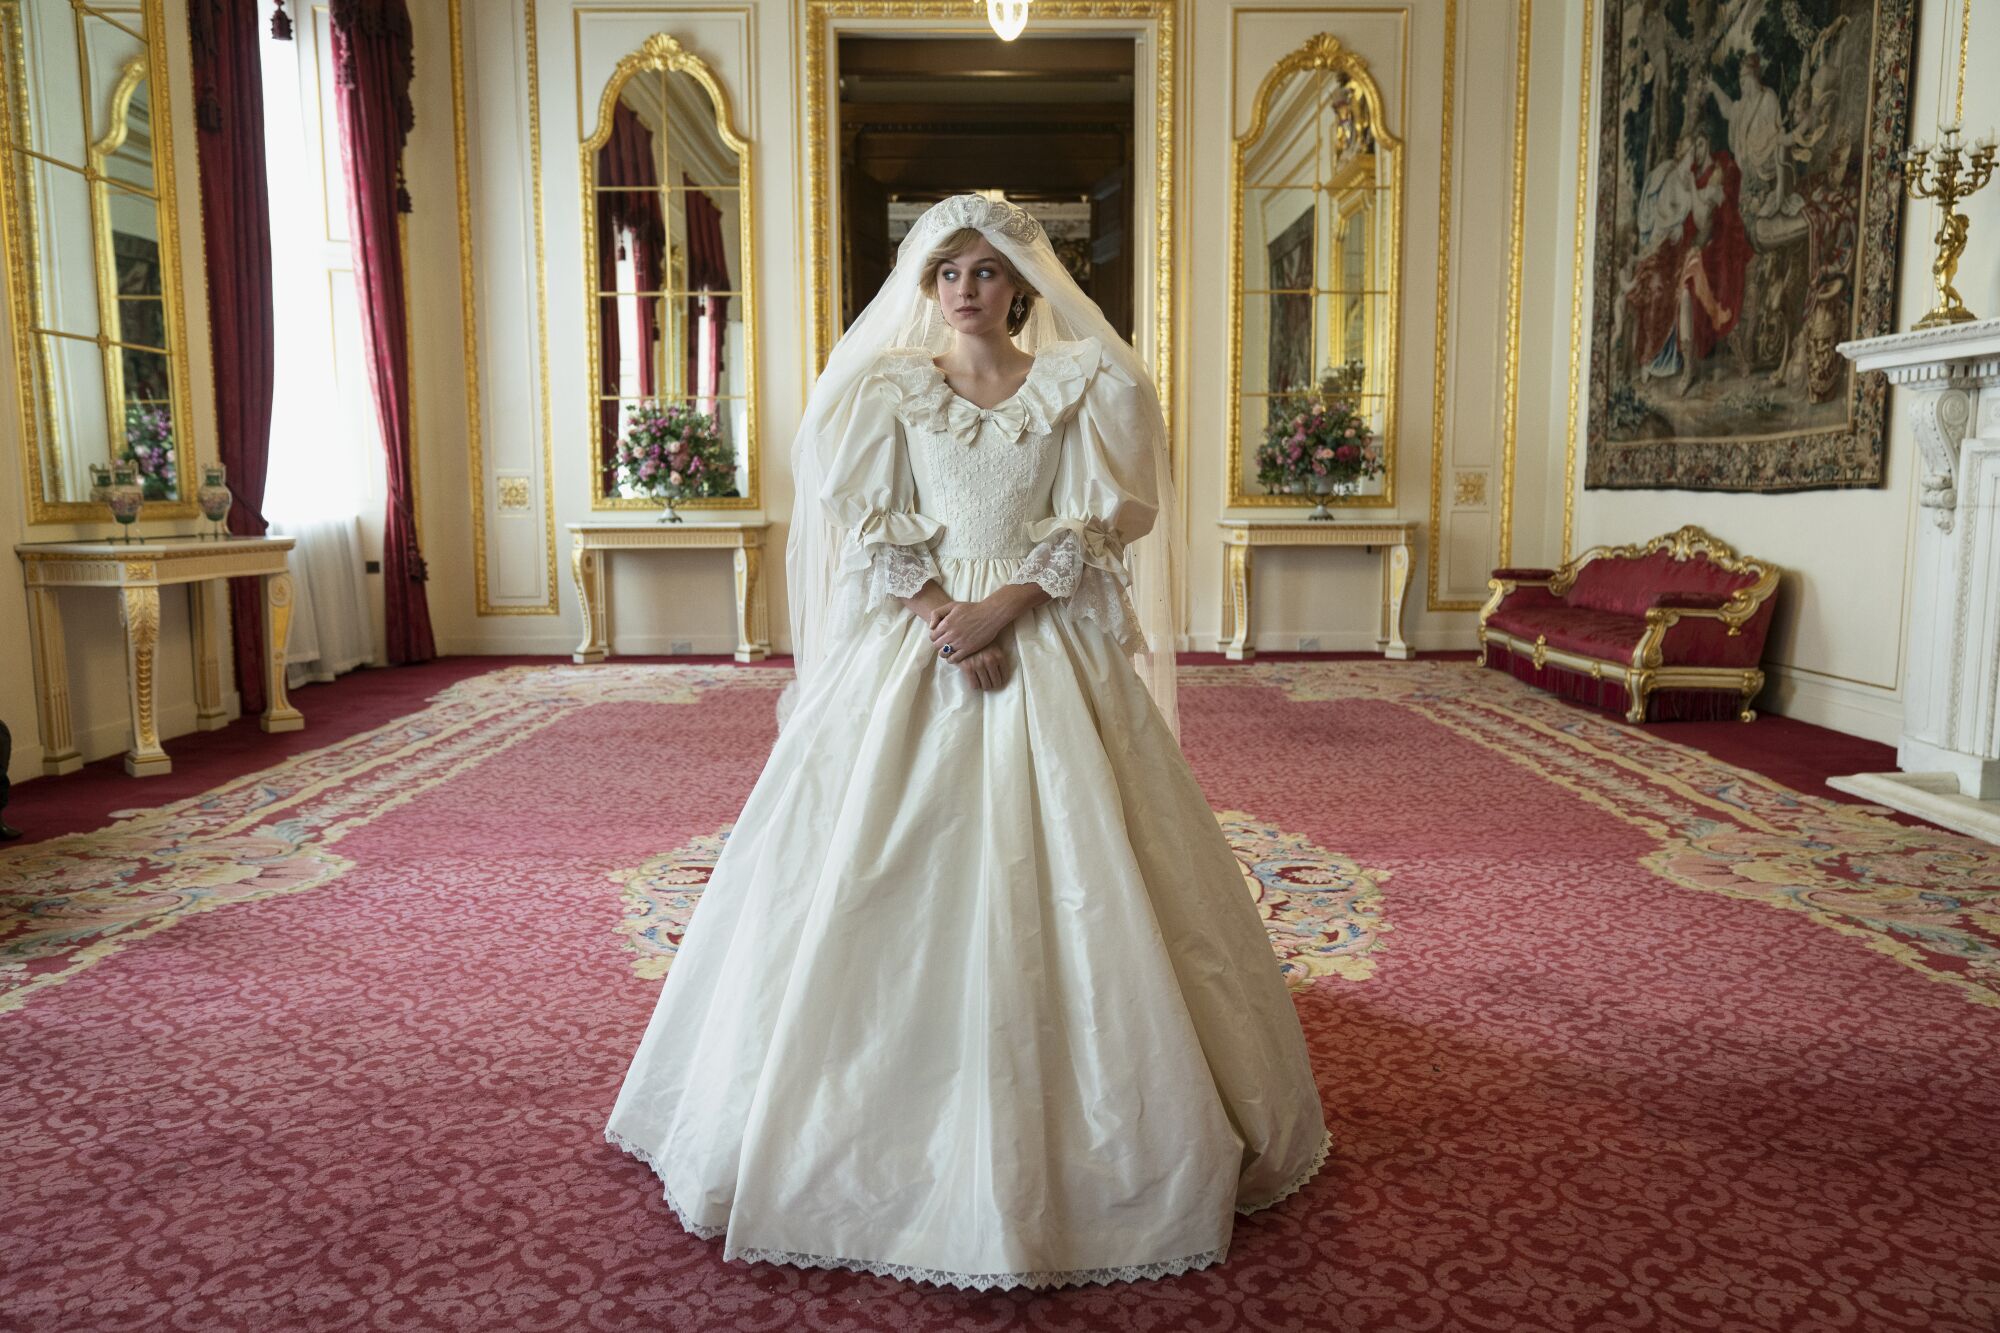 Emma Corrin as Princess Diana in her iconic wedding dress in "The Crown" season 4. 